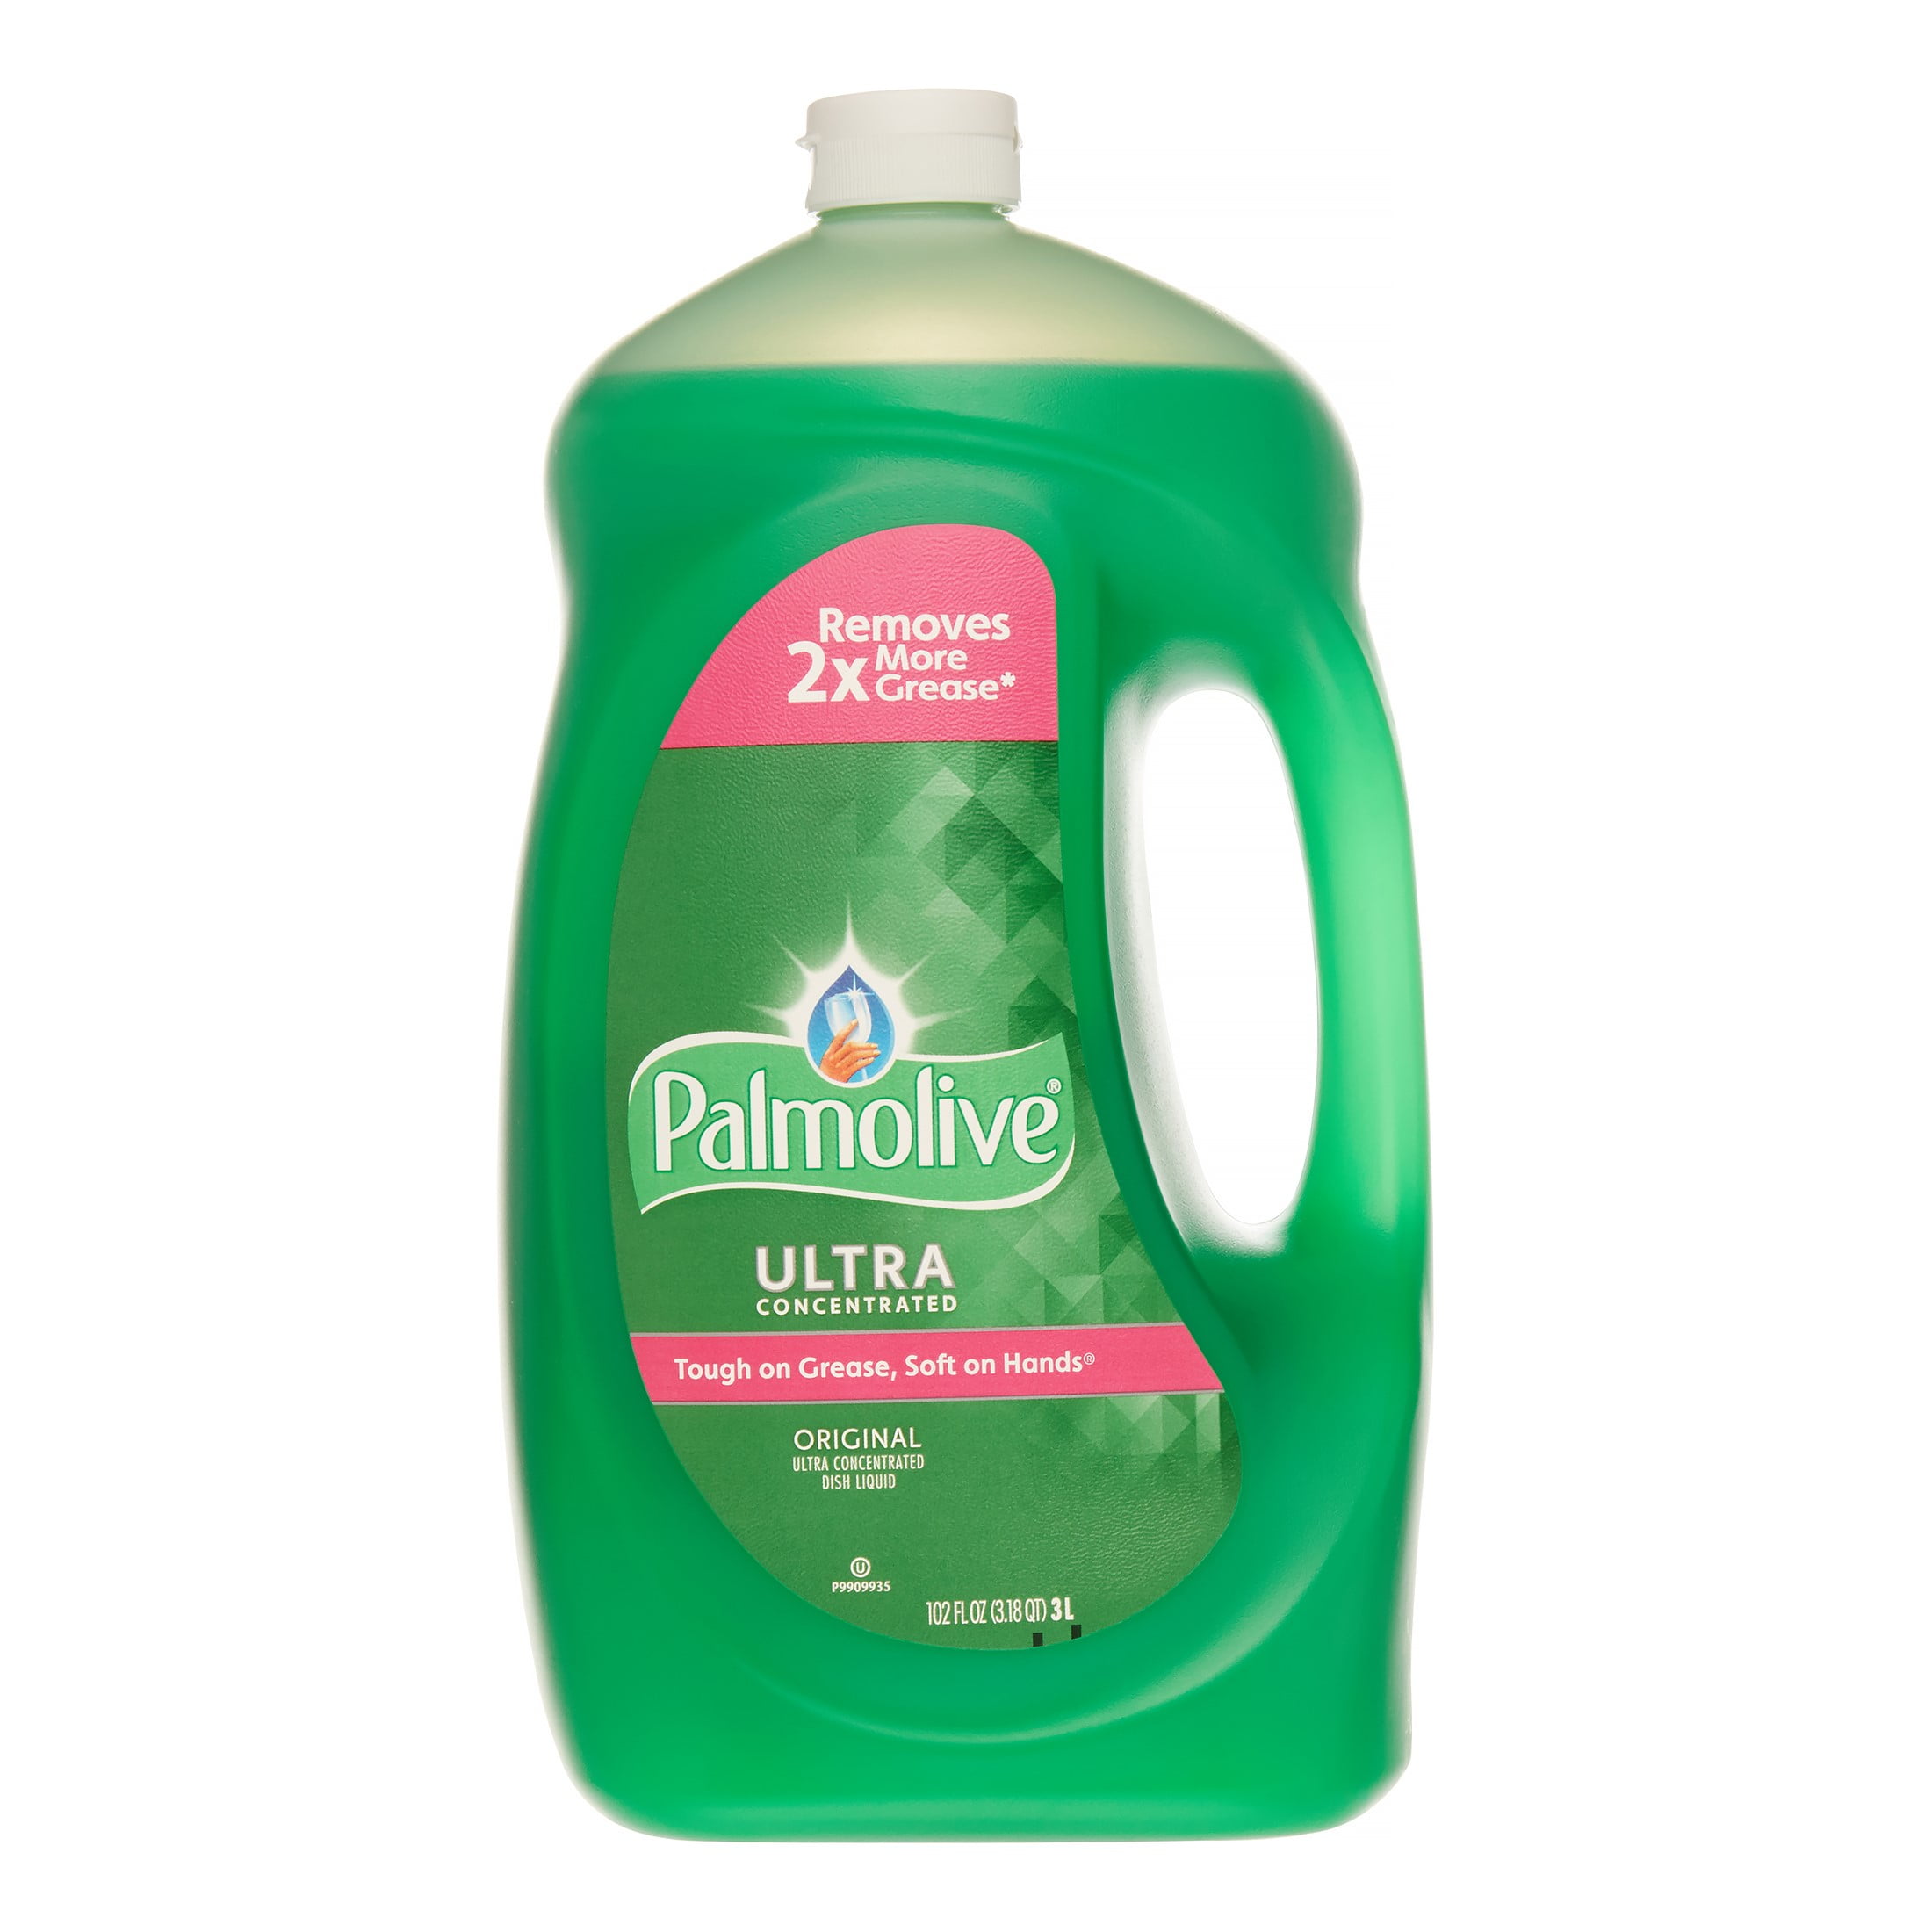 PALMOLIVE Dishwashing Liquid, Travel Dish Soap, Original Scent, Green, 3  Fluid Ounce Bottle (Case of 72) - Total of 216 Fluid Ounces - Dishwashing